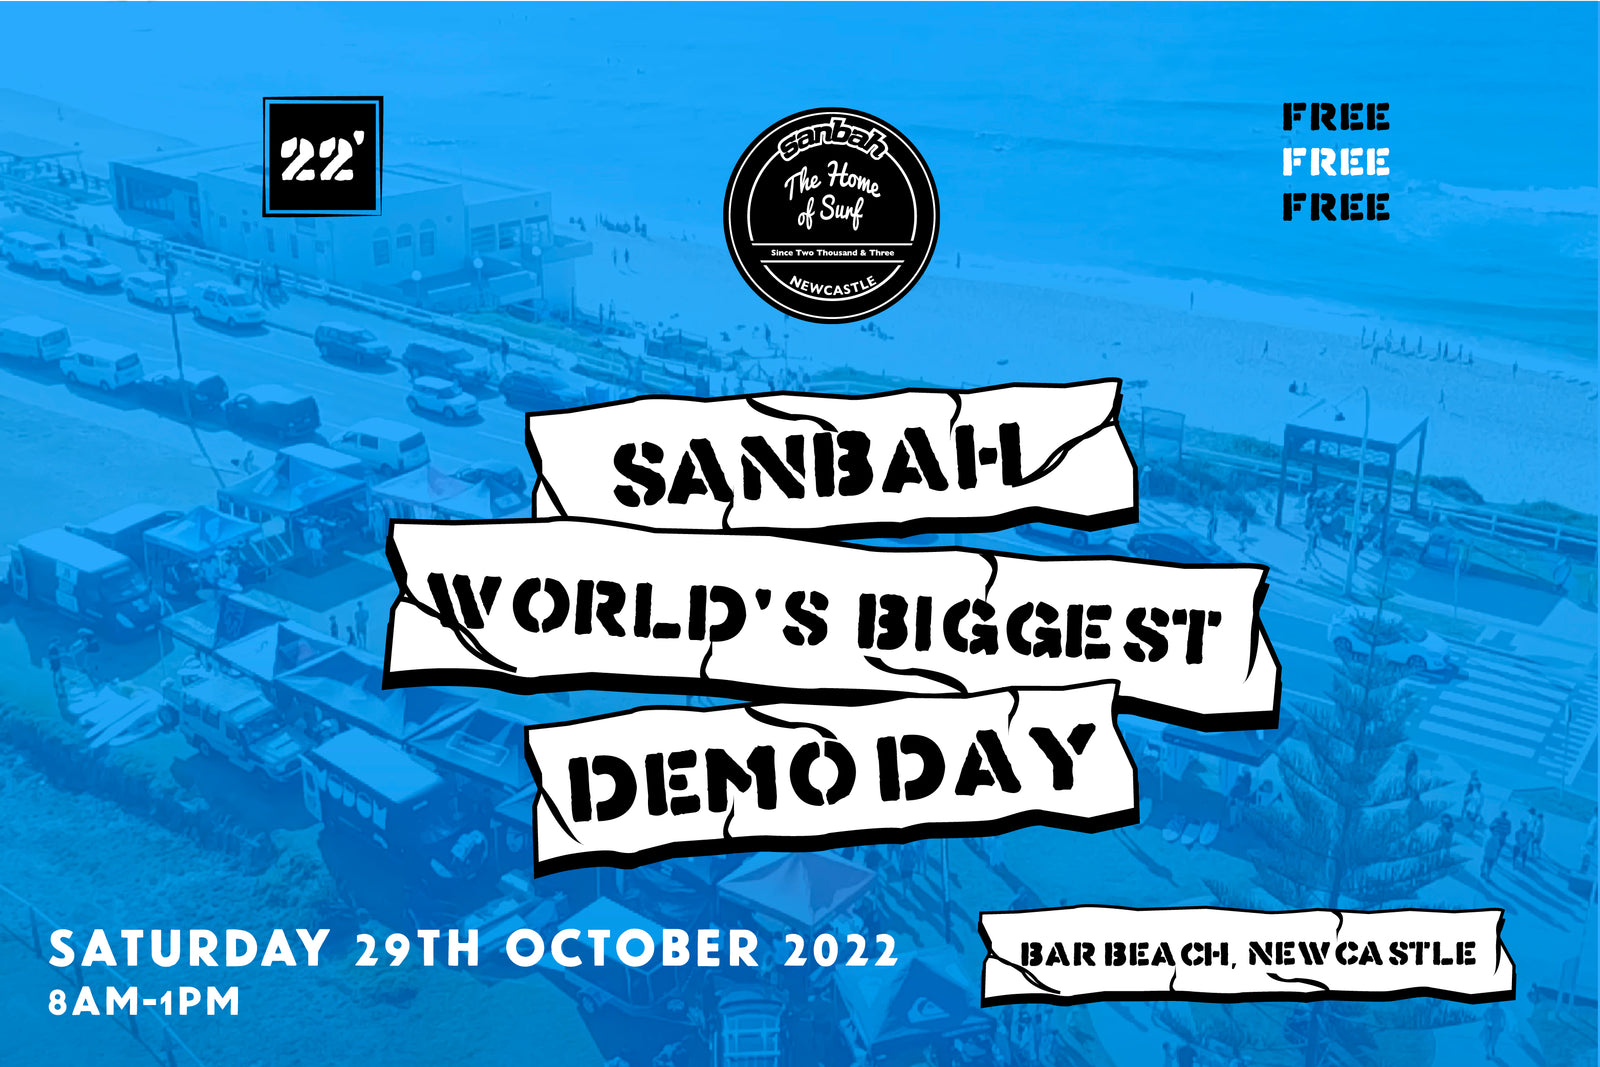 THE SANBAH WORLDS BIGGEST SURFBOARD DEMO DAY IS BACK!